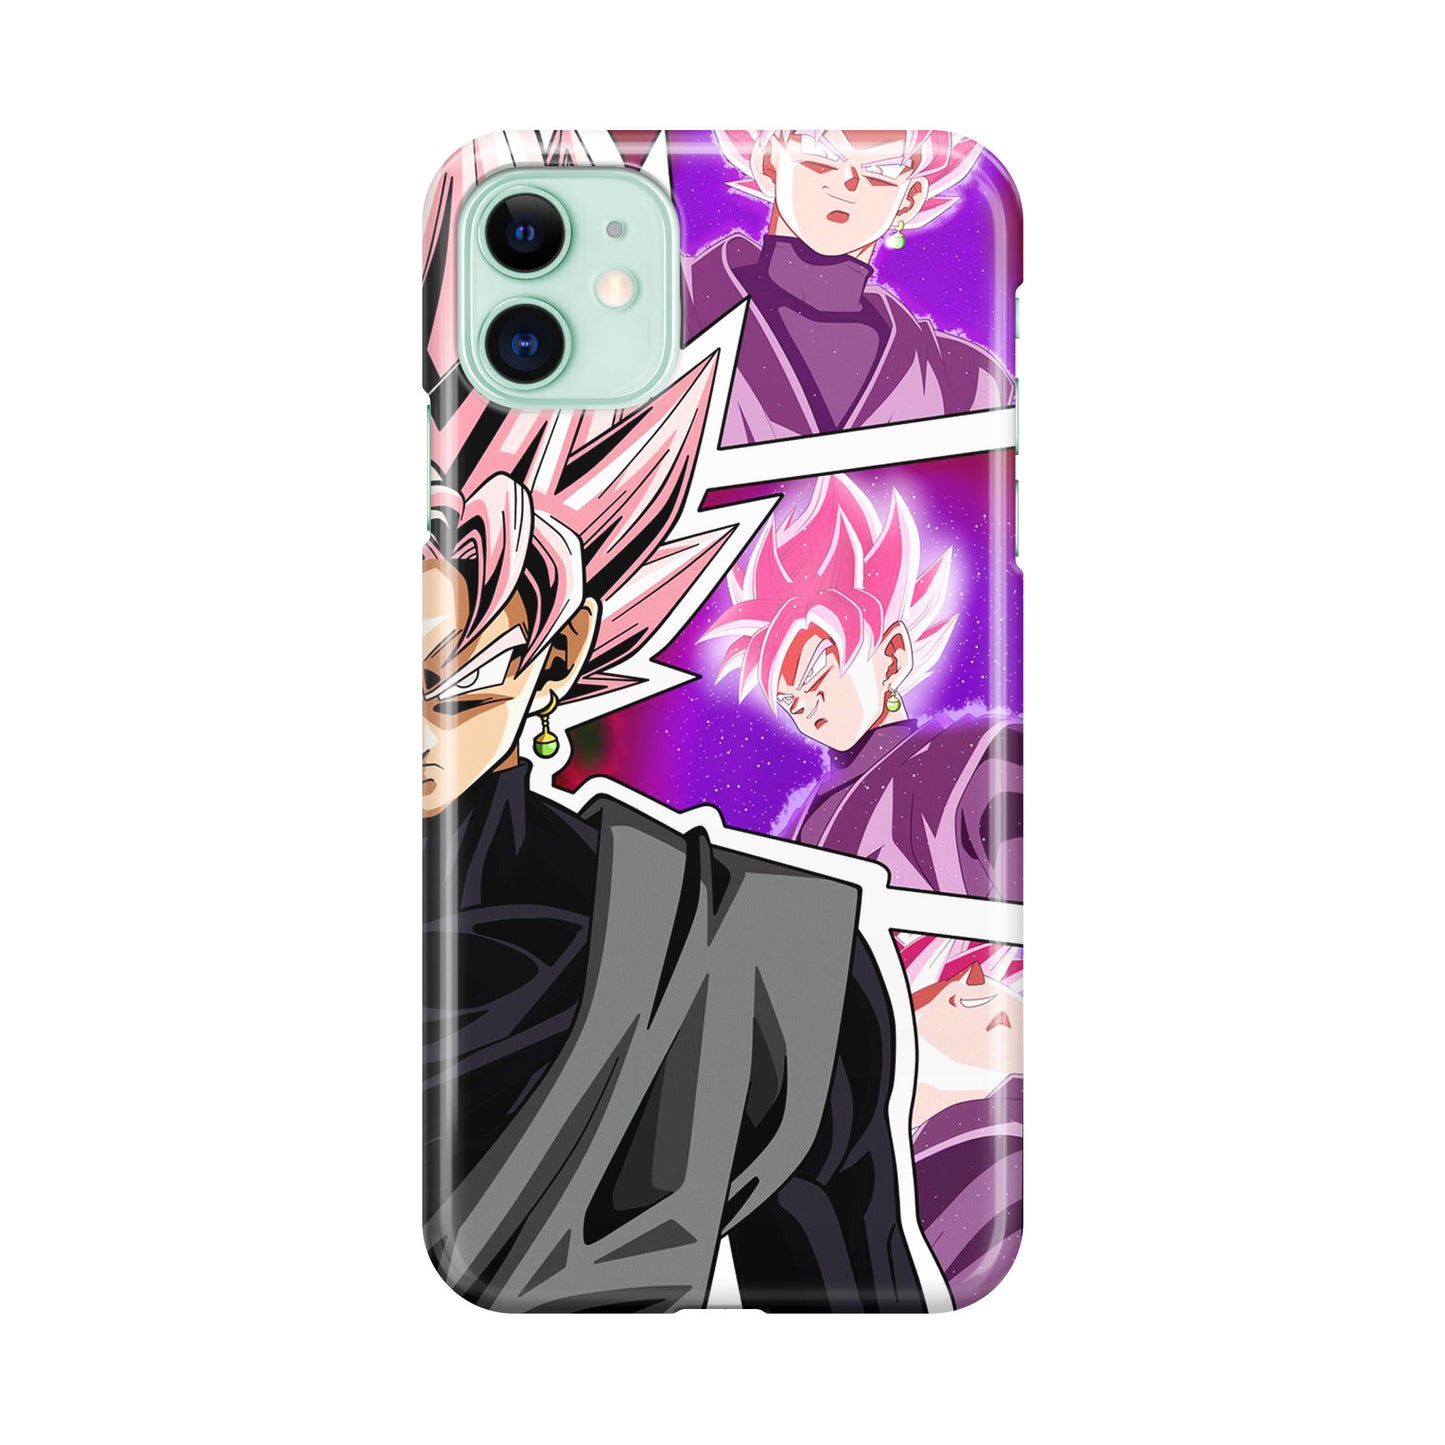 Super Goku Black Rose Collage iPhone 12 Case